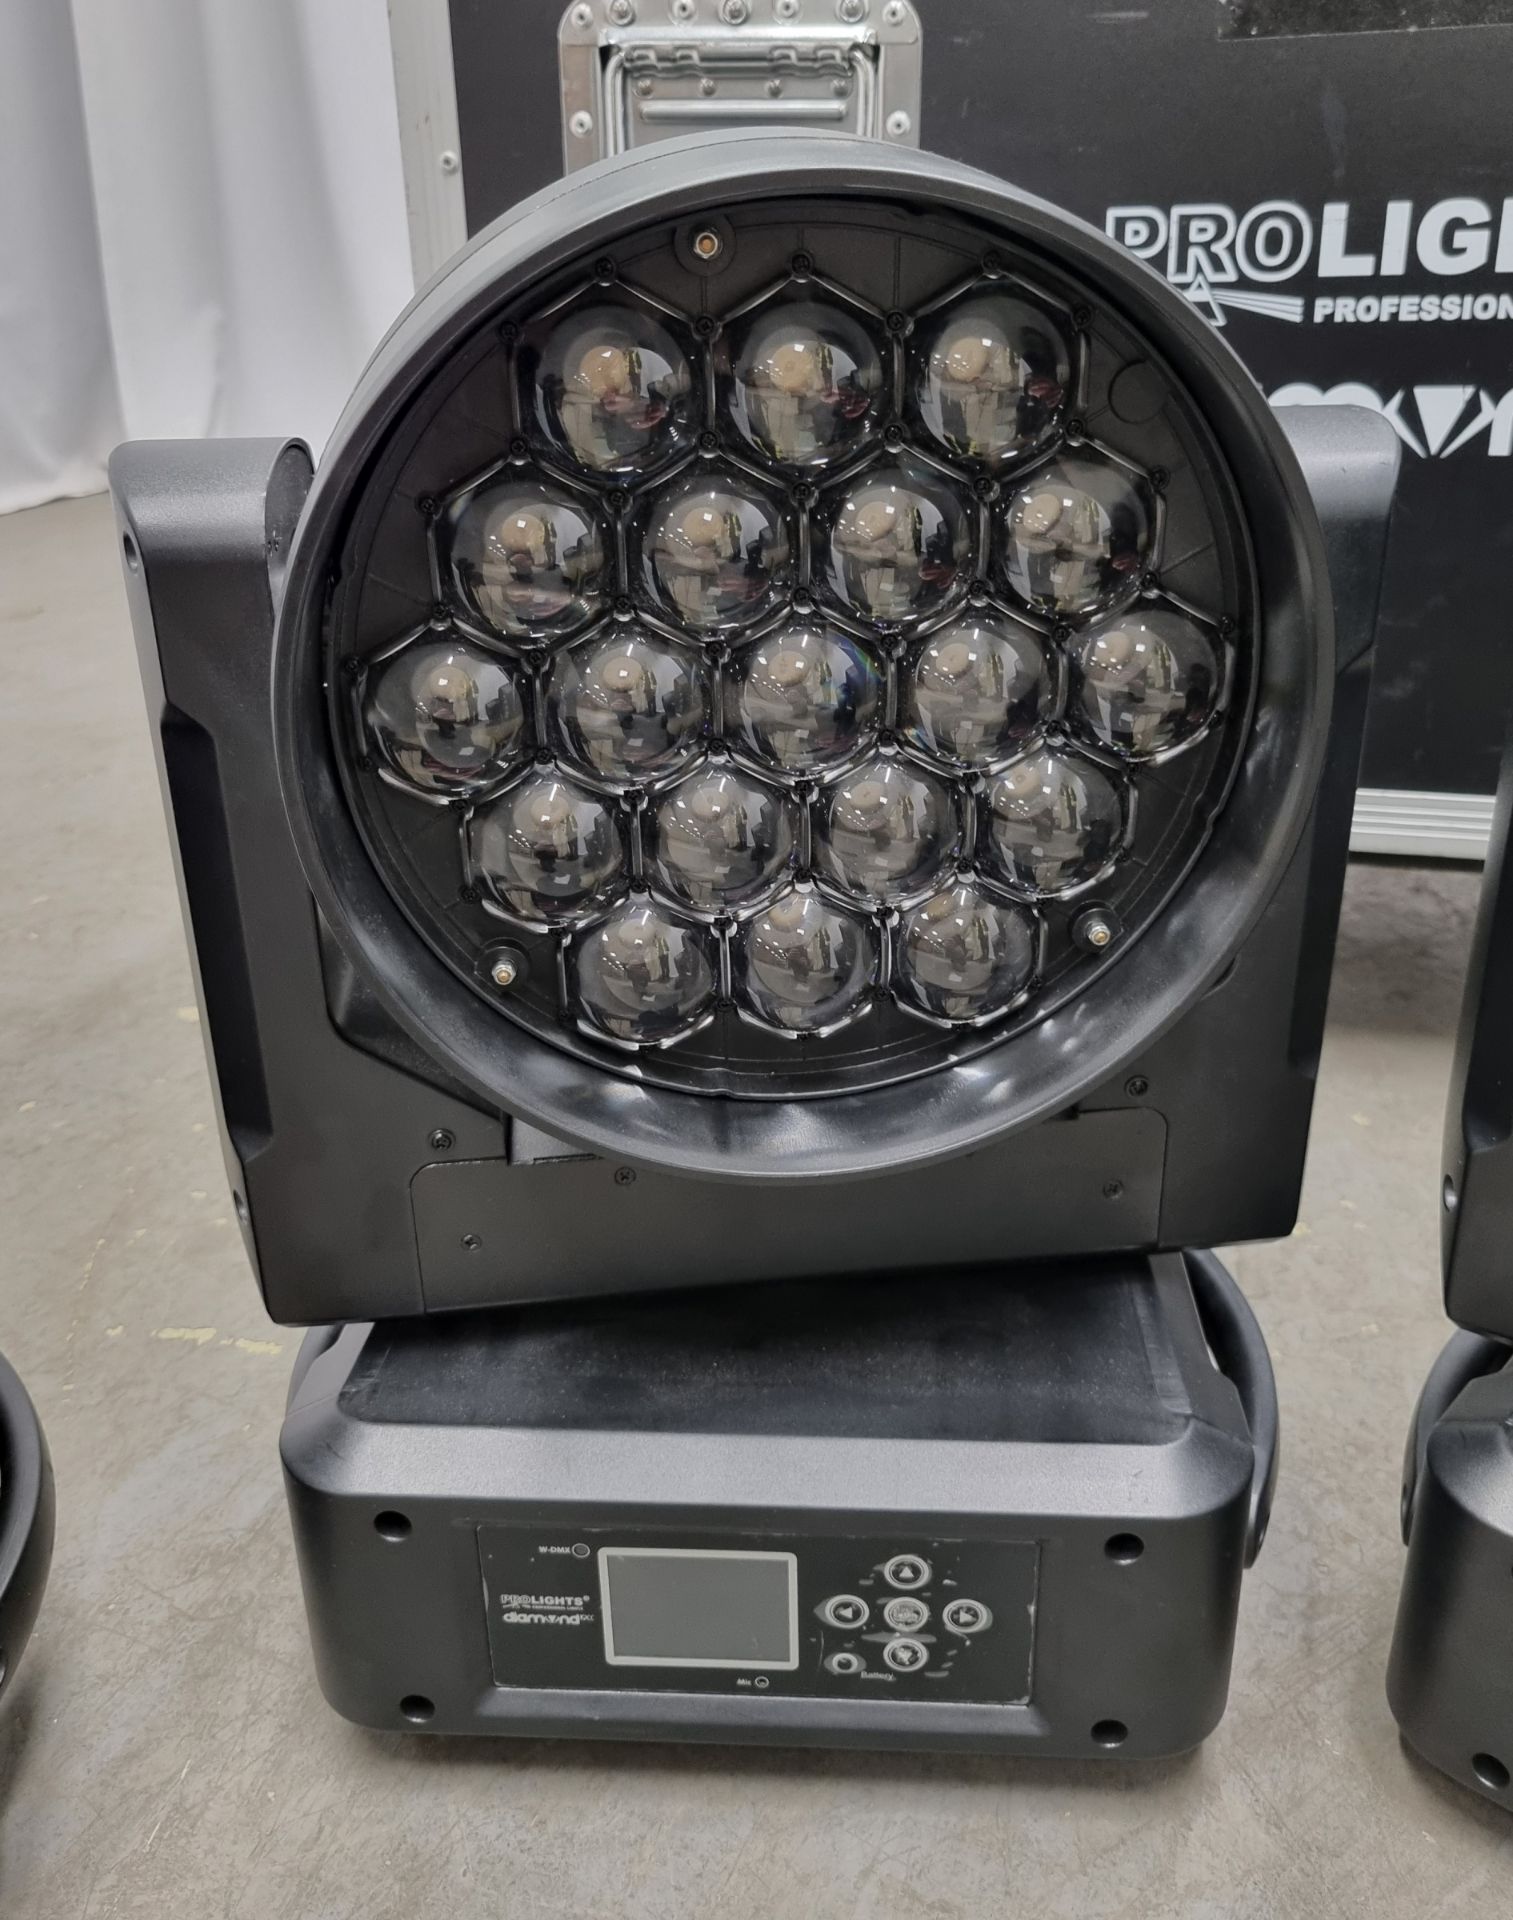 4x Prolights Diamond 19CC 19x15W moving LED wash lights with flight case - Image 5 of 12